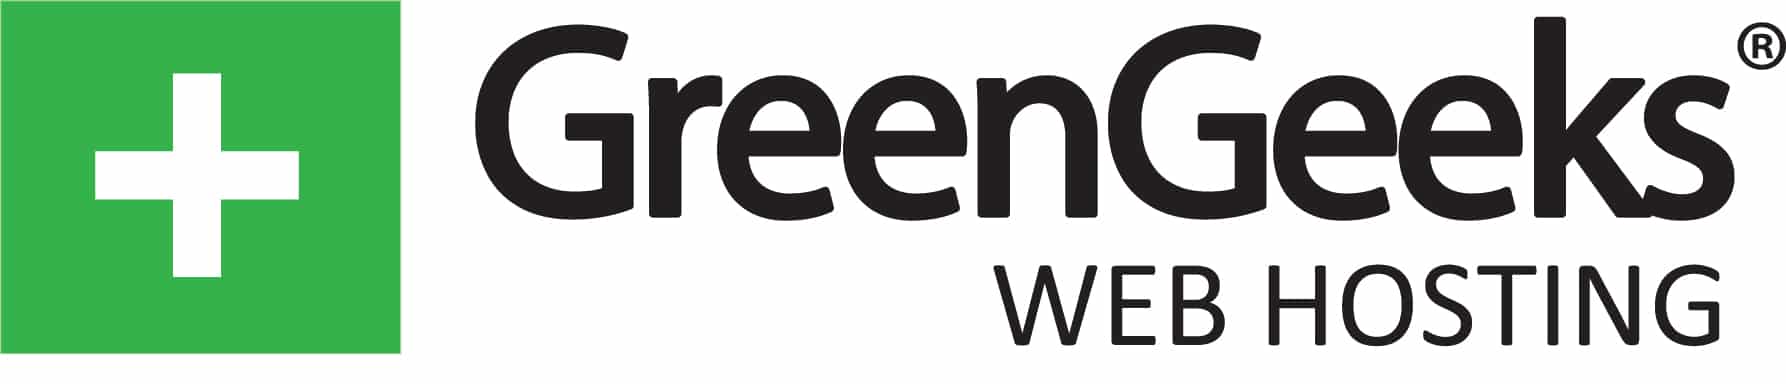 Greengeek web hosting